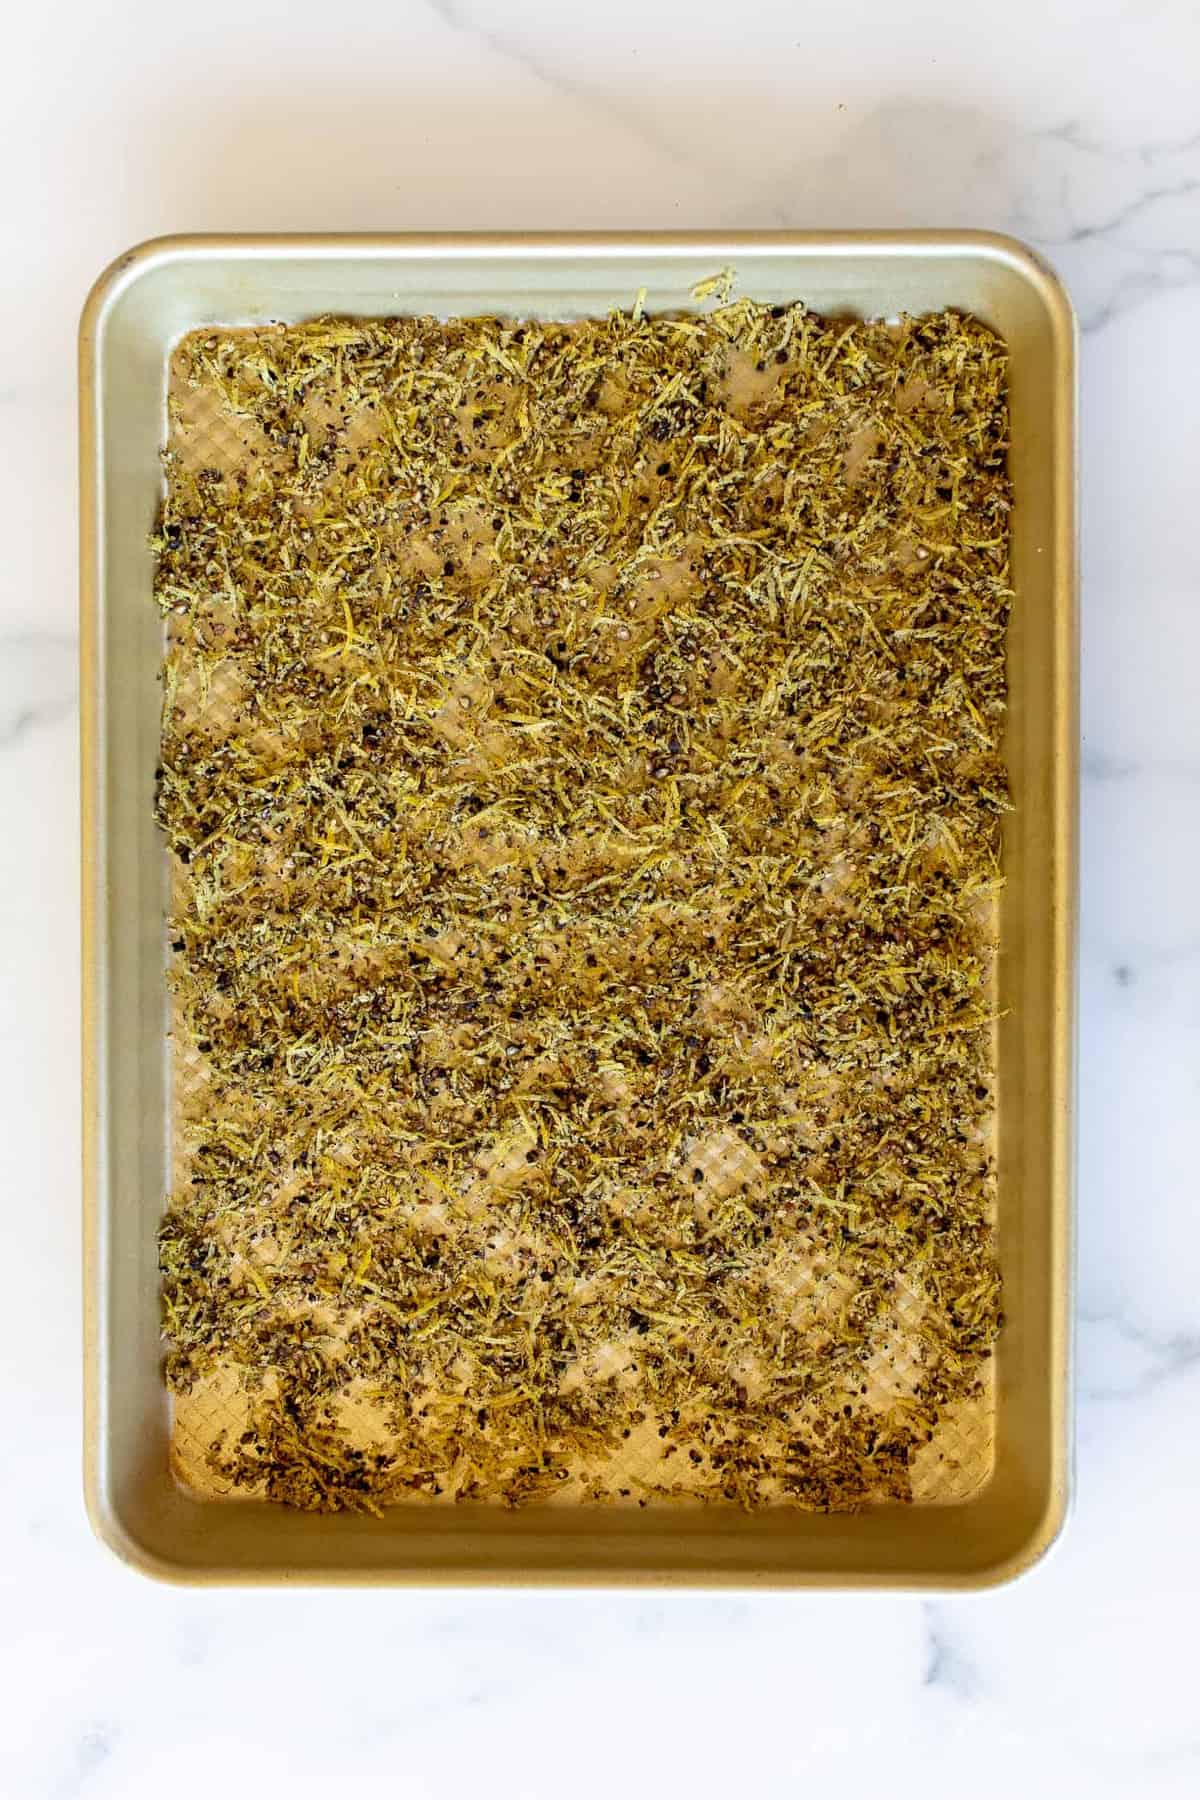 A gold sheetpan filled with baked lemon pepper seasoning.